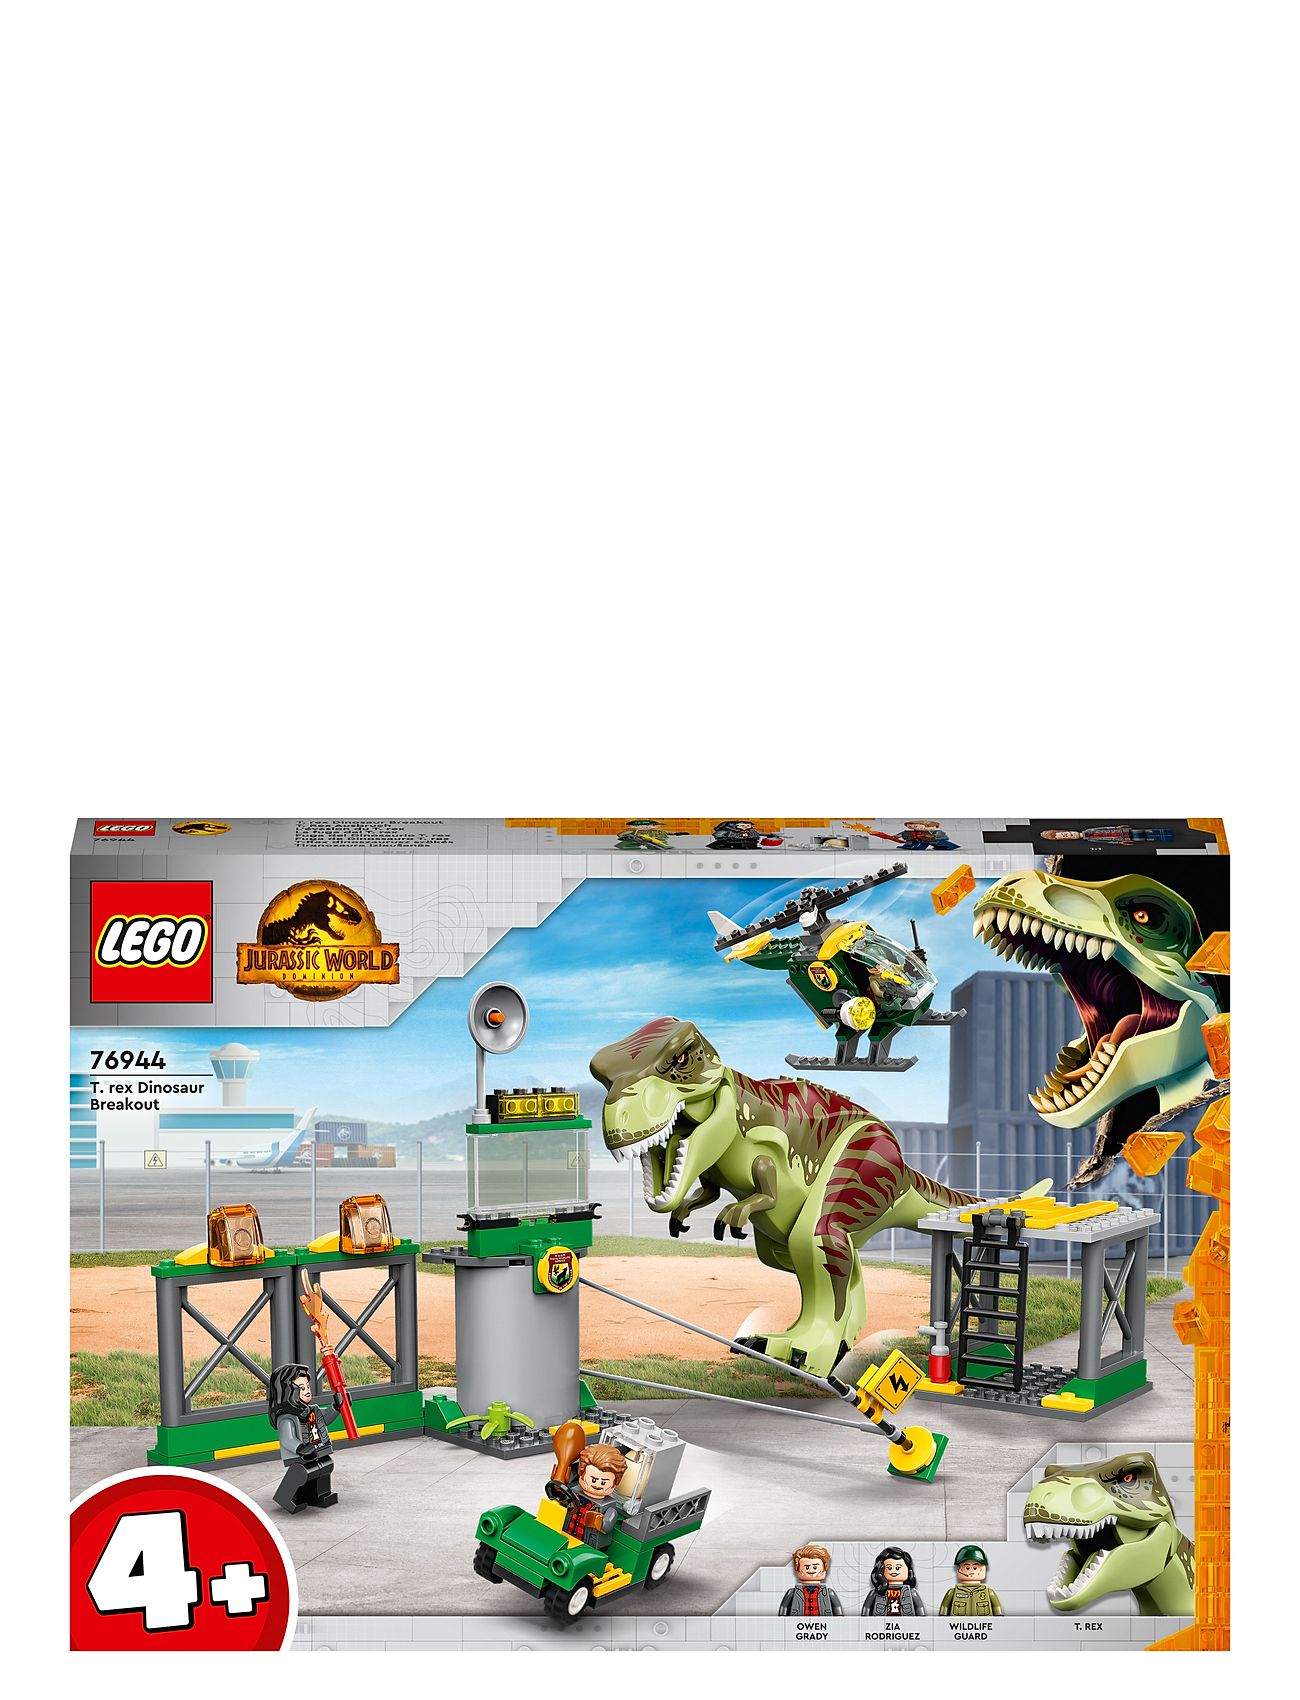 LEGO "T. Rex Dinosaur Breakout Toy Set Toys Lego jurassic World Multi/patterned LEGO"